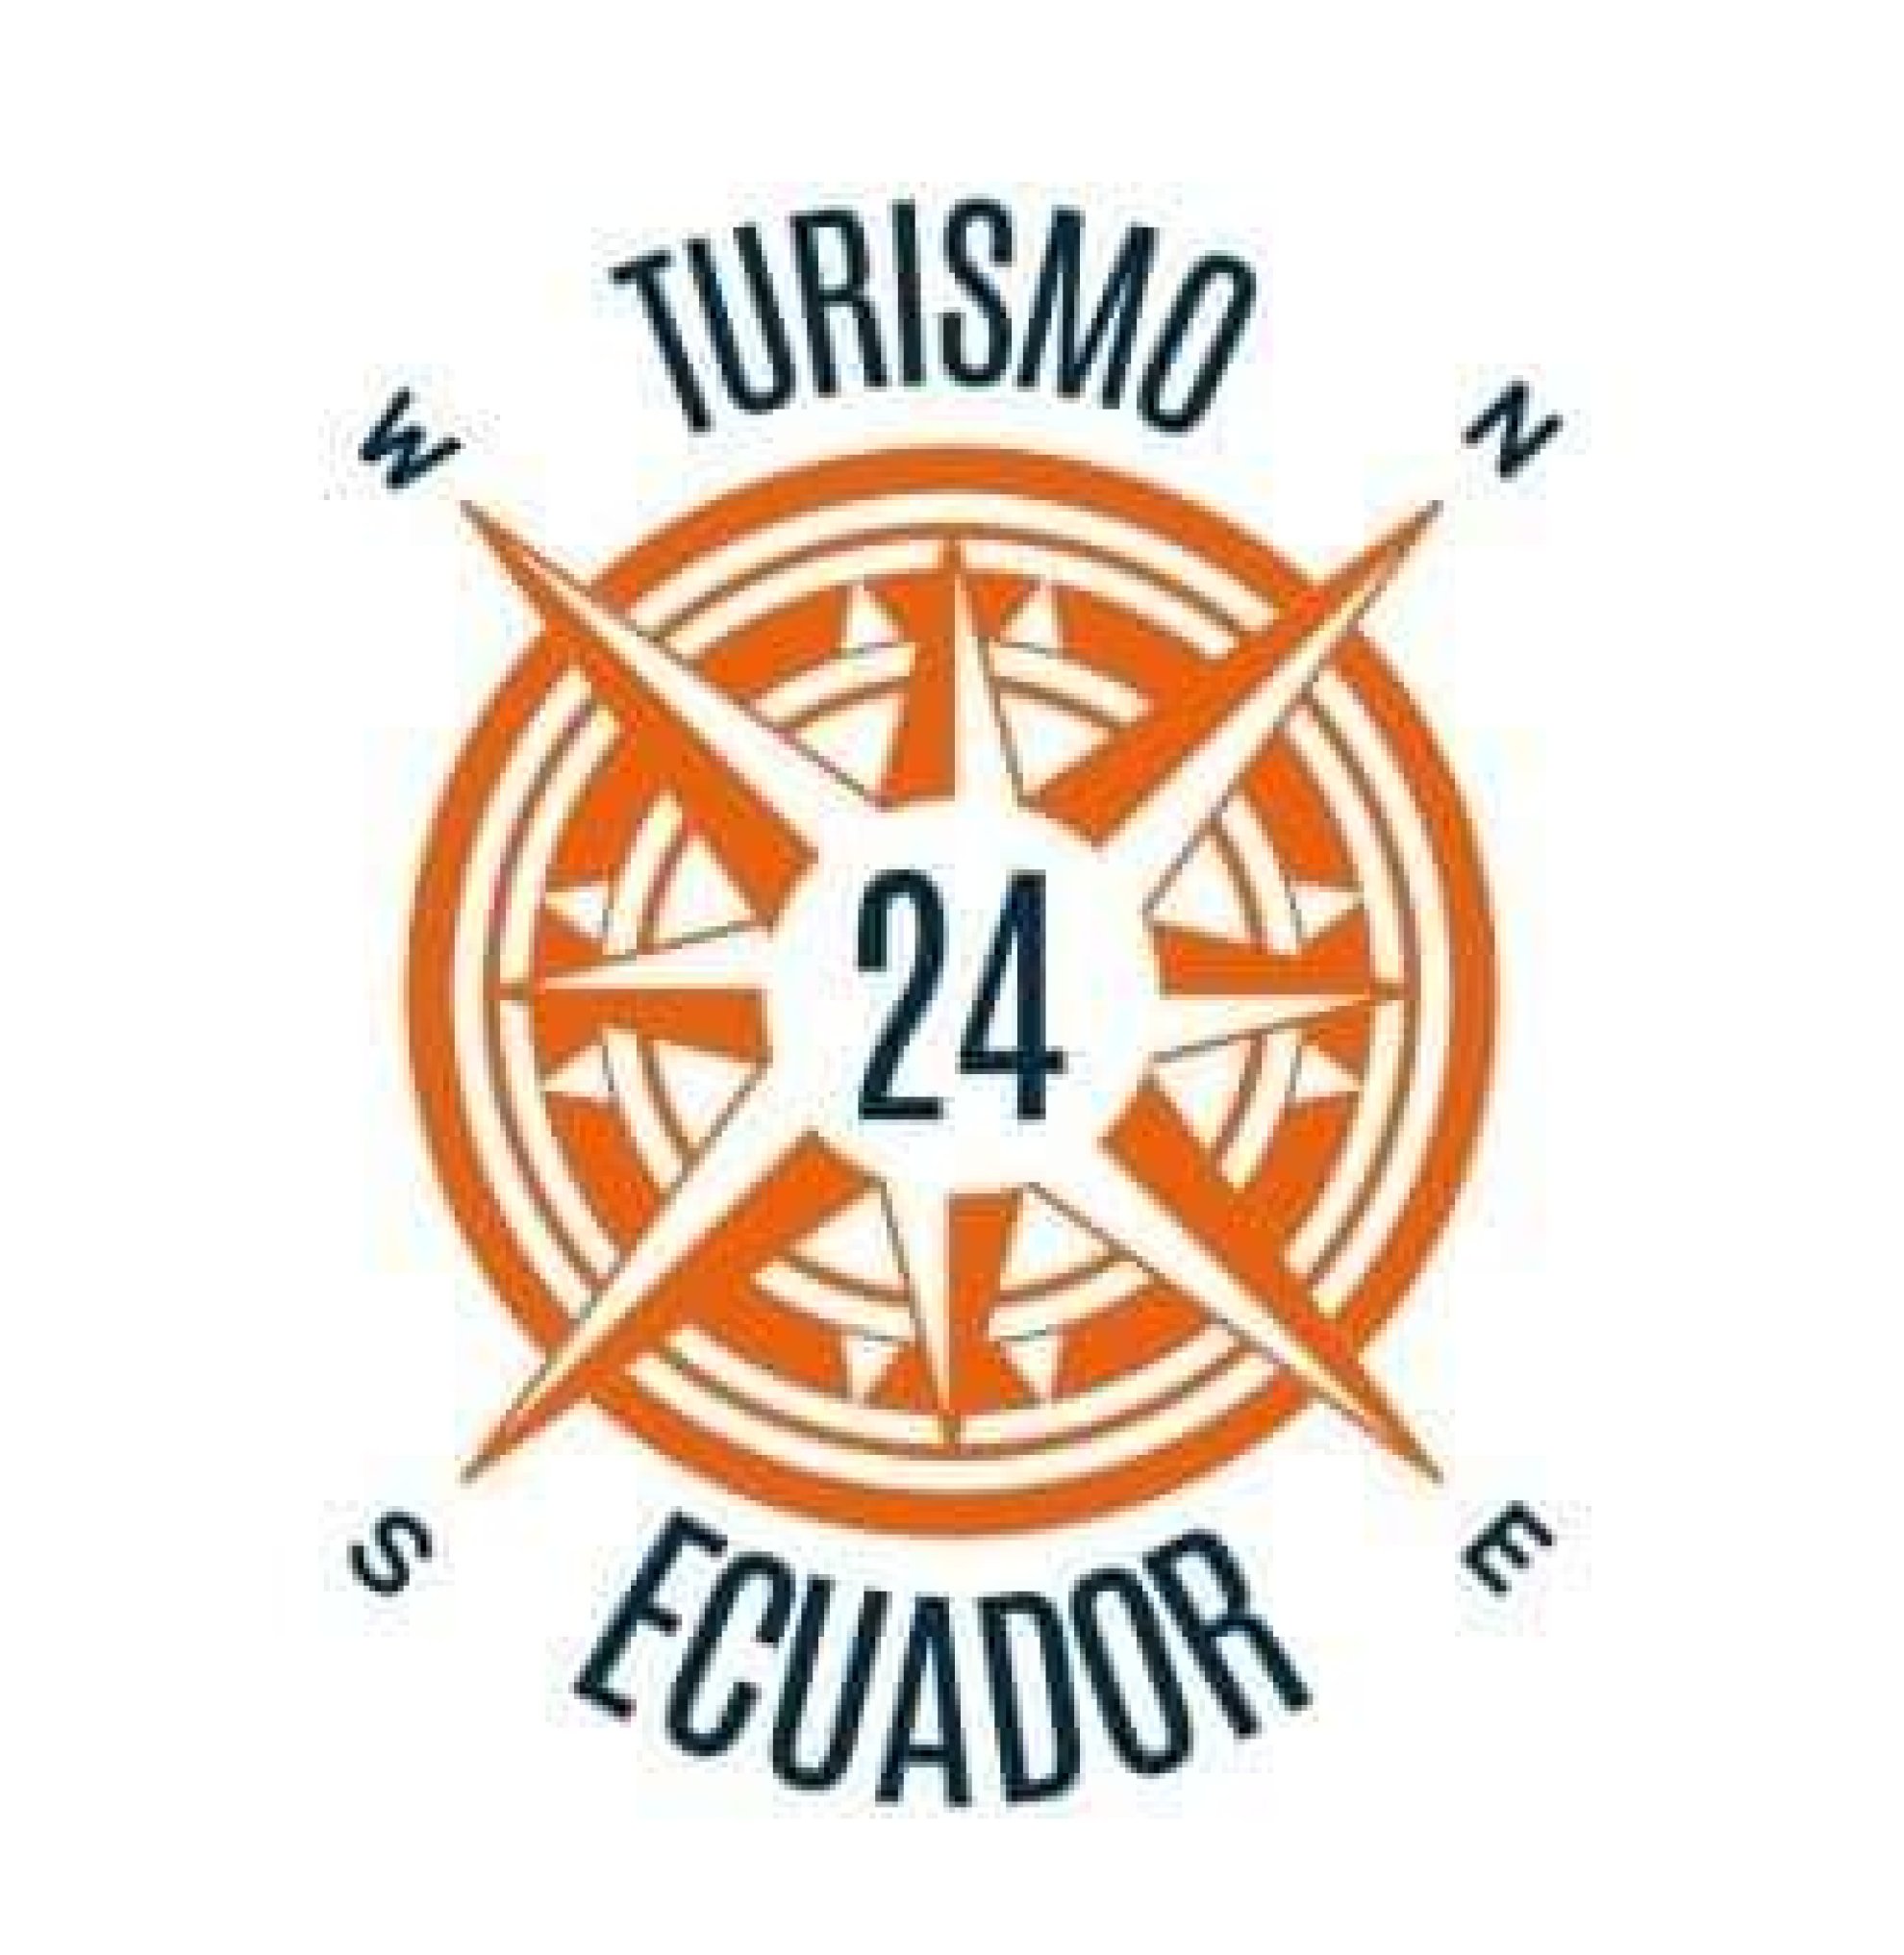 Turismo Ecuador 24